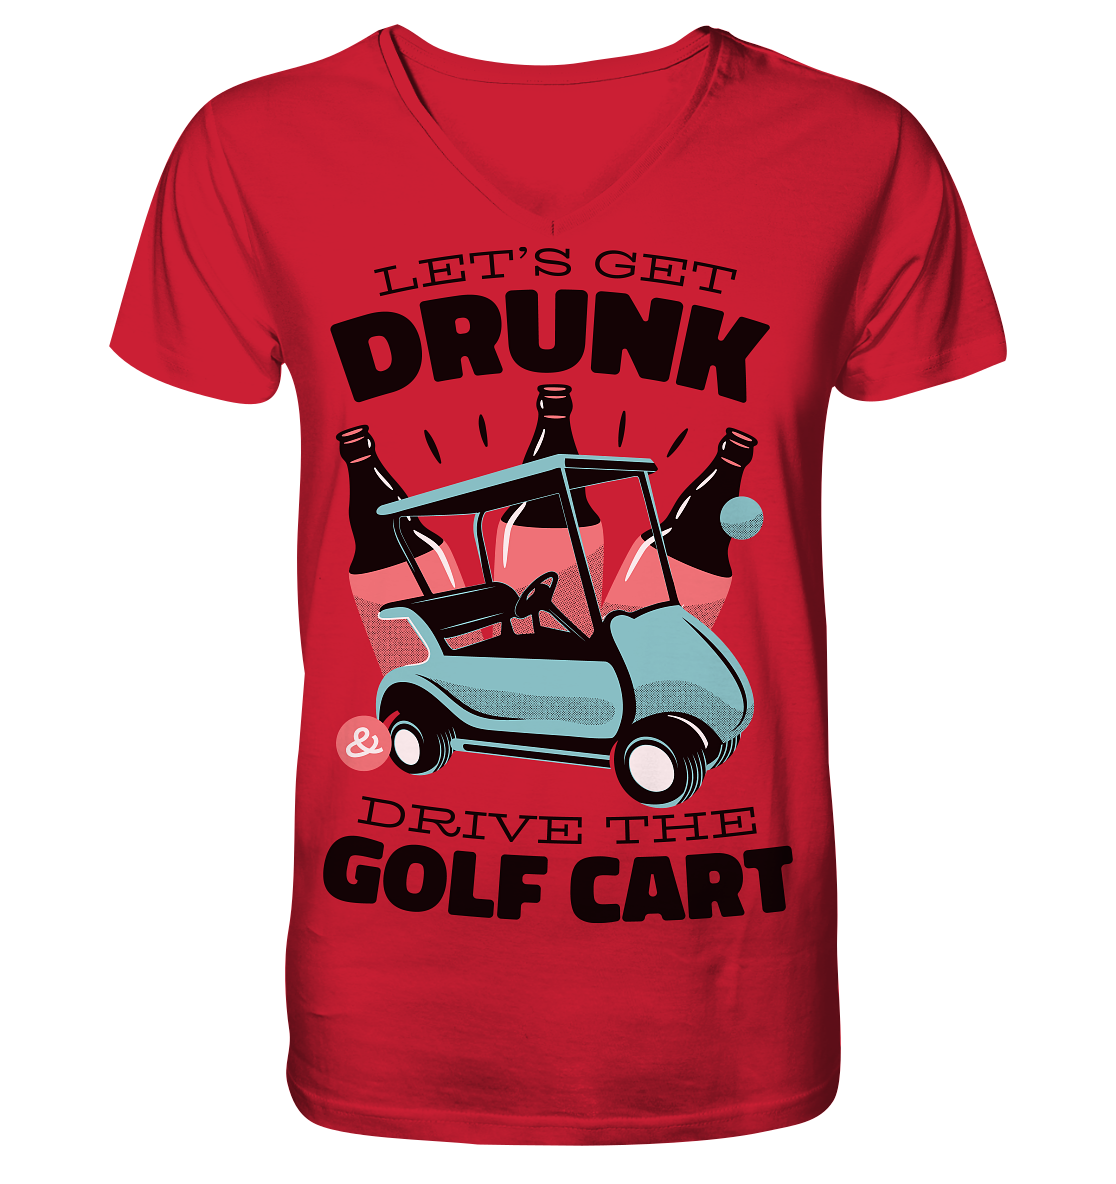 Let's get drunk drive the golf cart - Men's Organic V-Neck Shirt